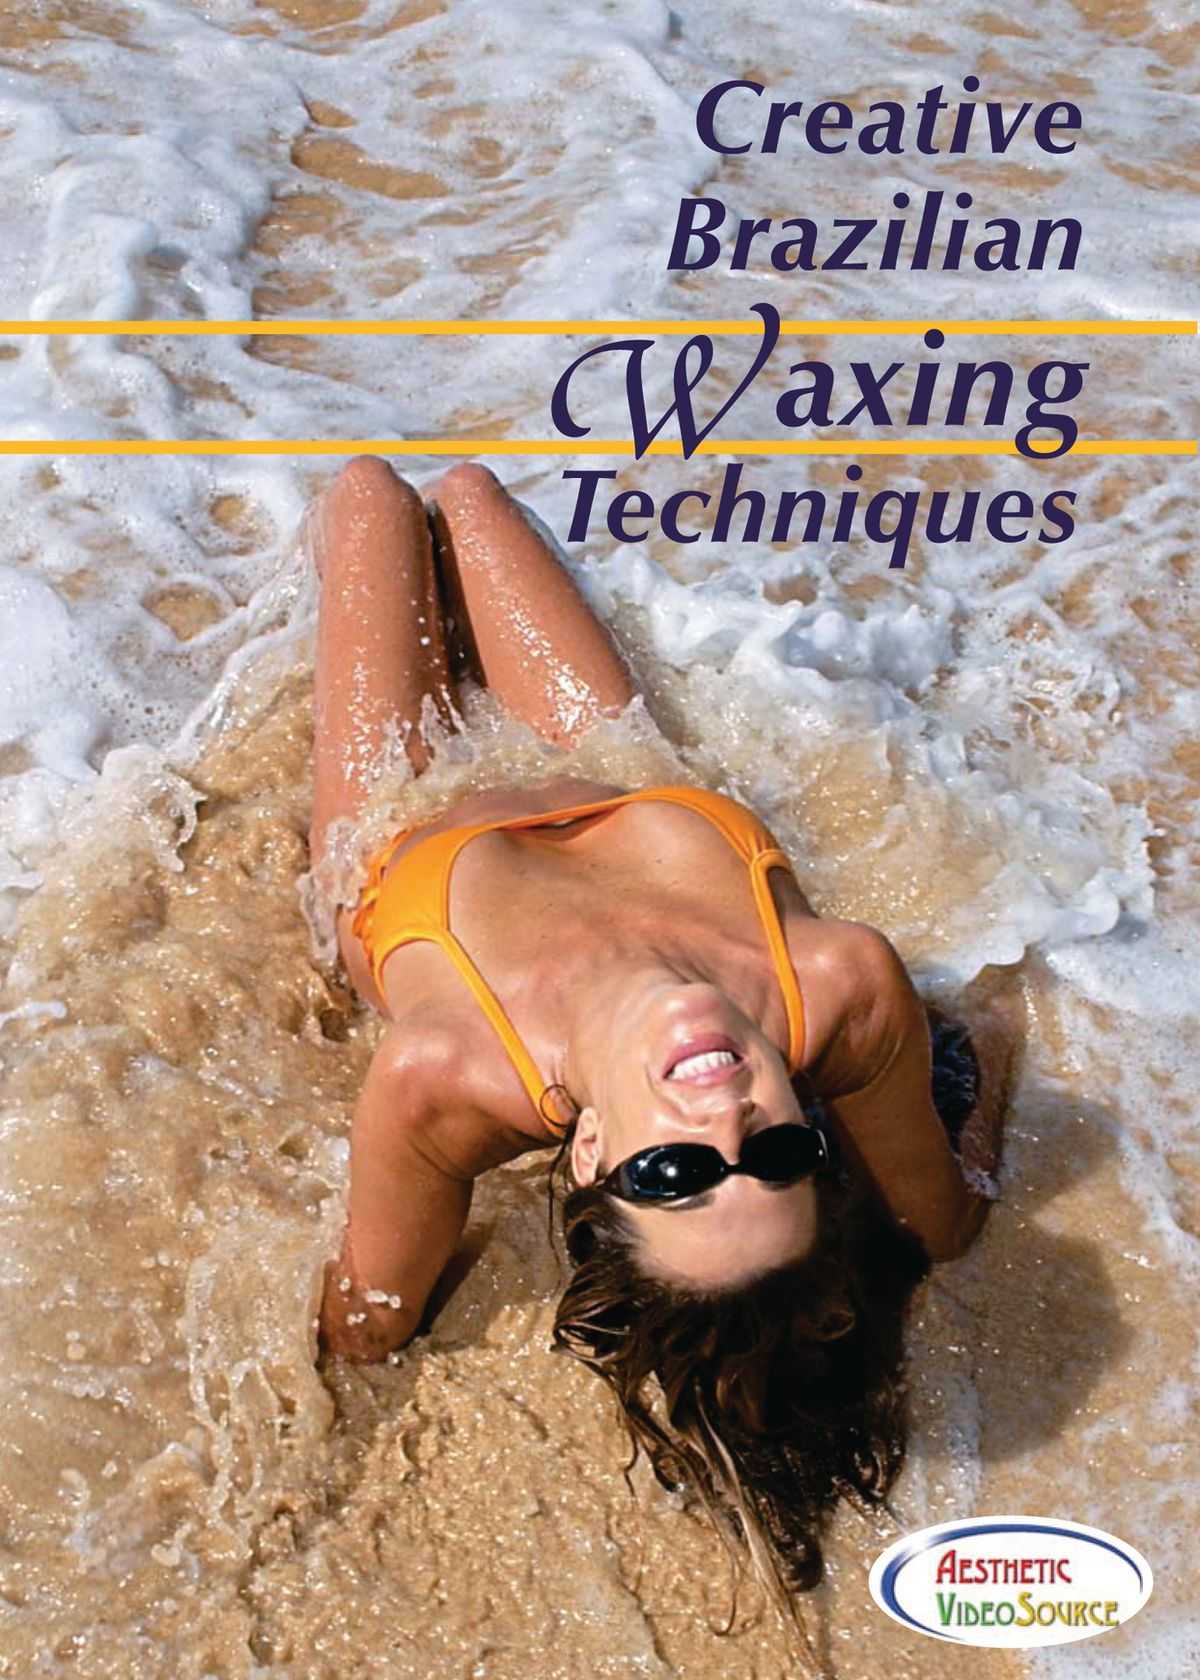 demetrice goodman recommends Brazilian Waxing At Home Video